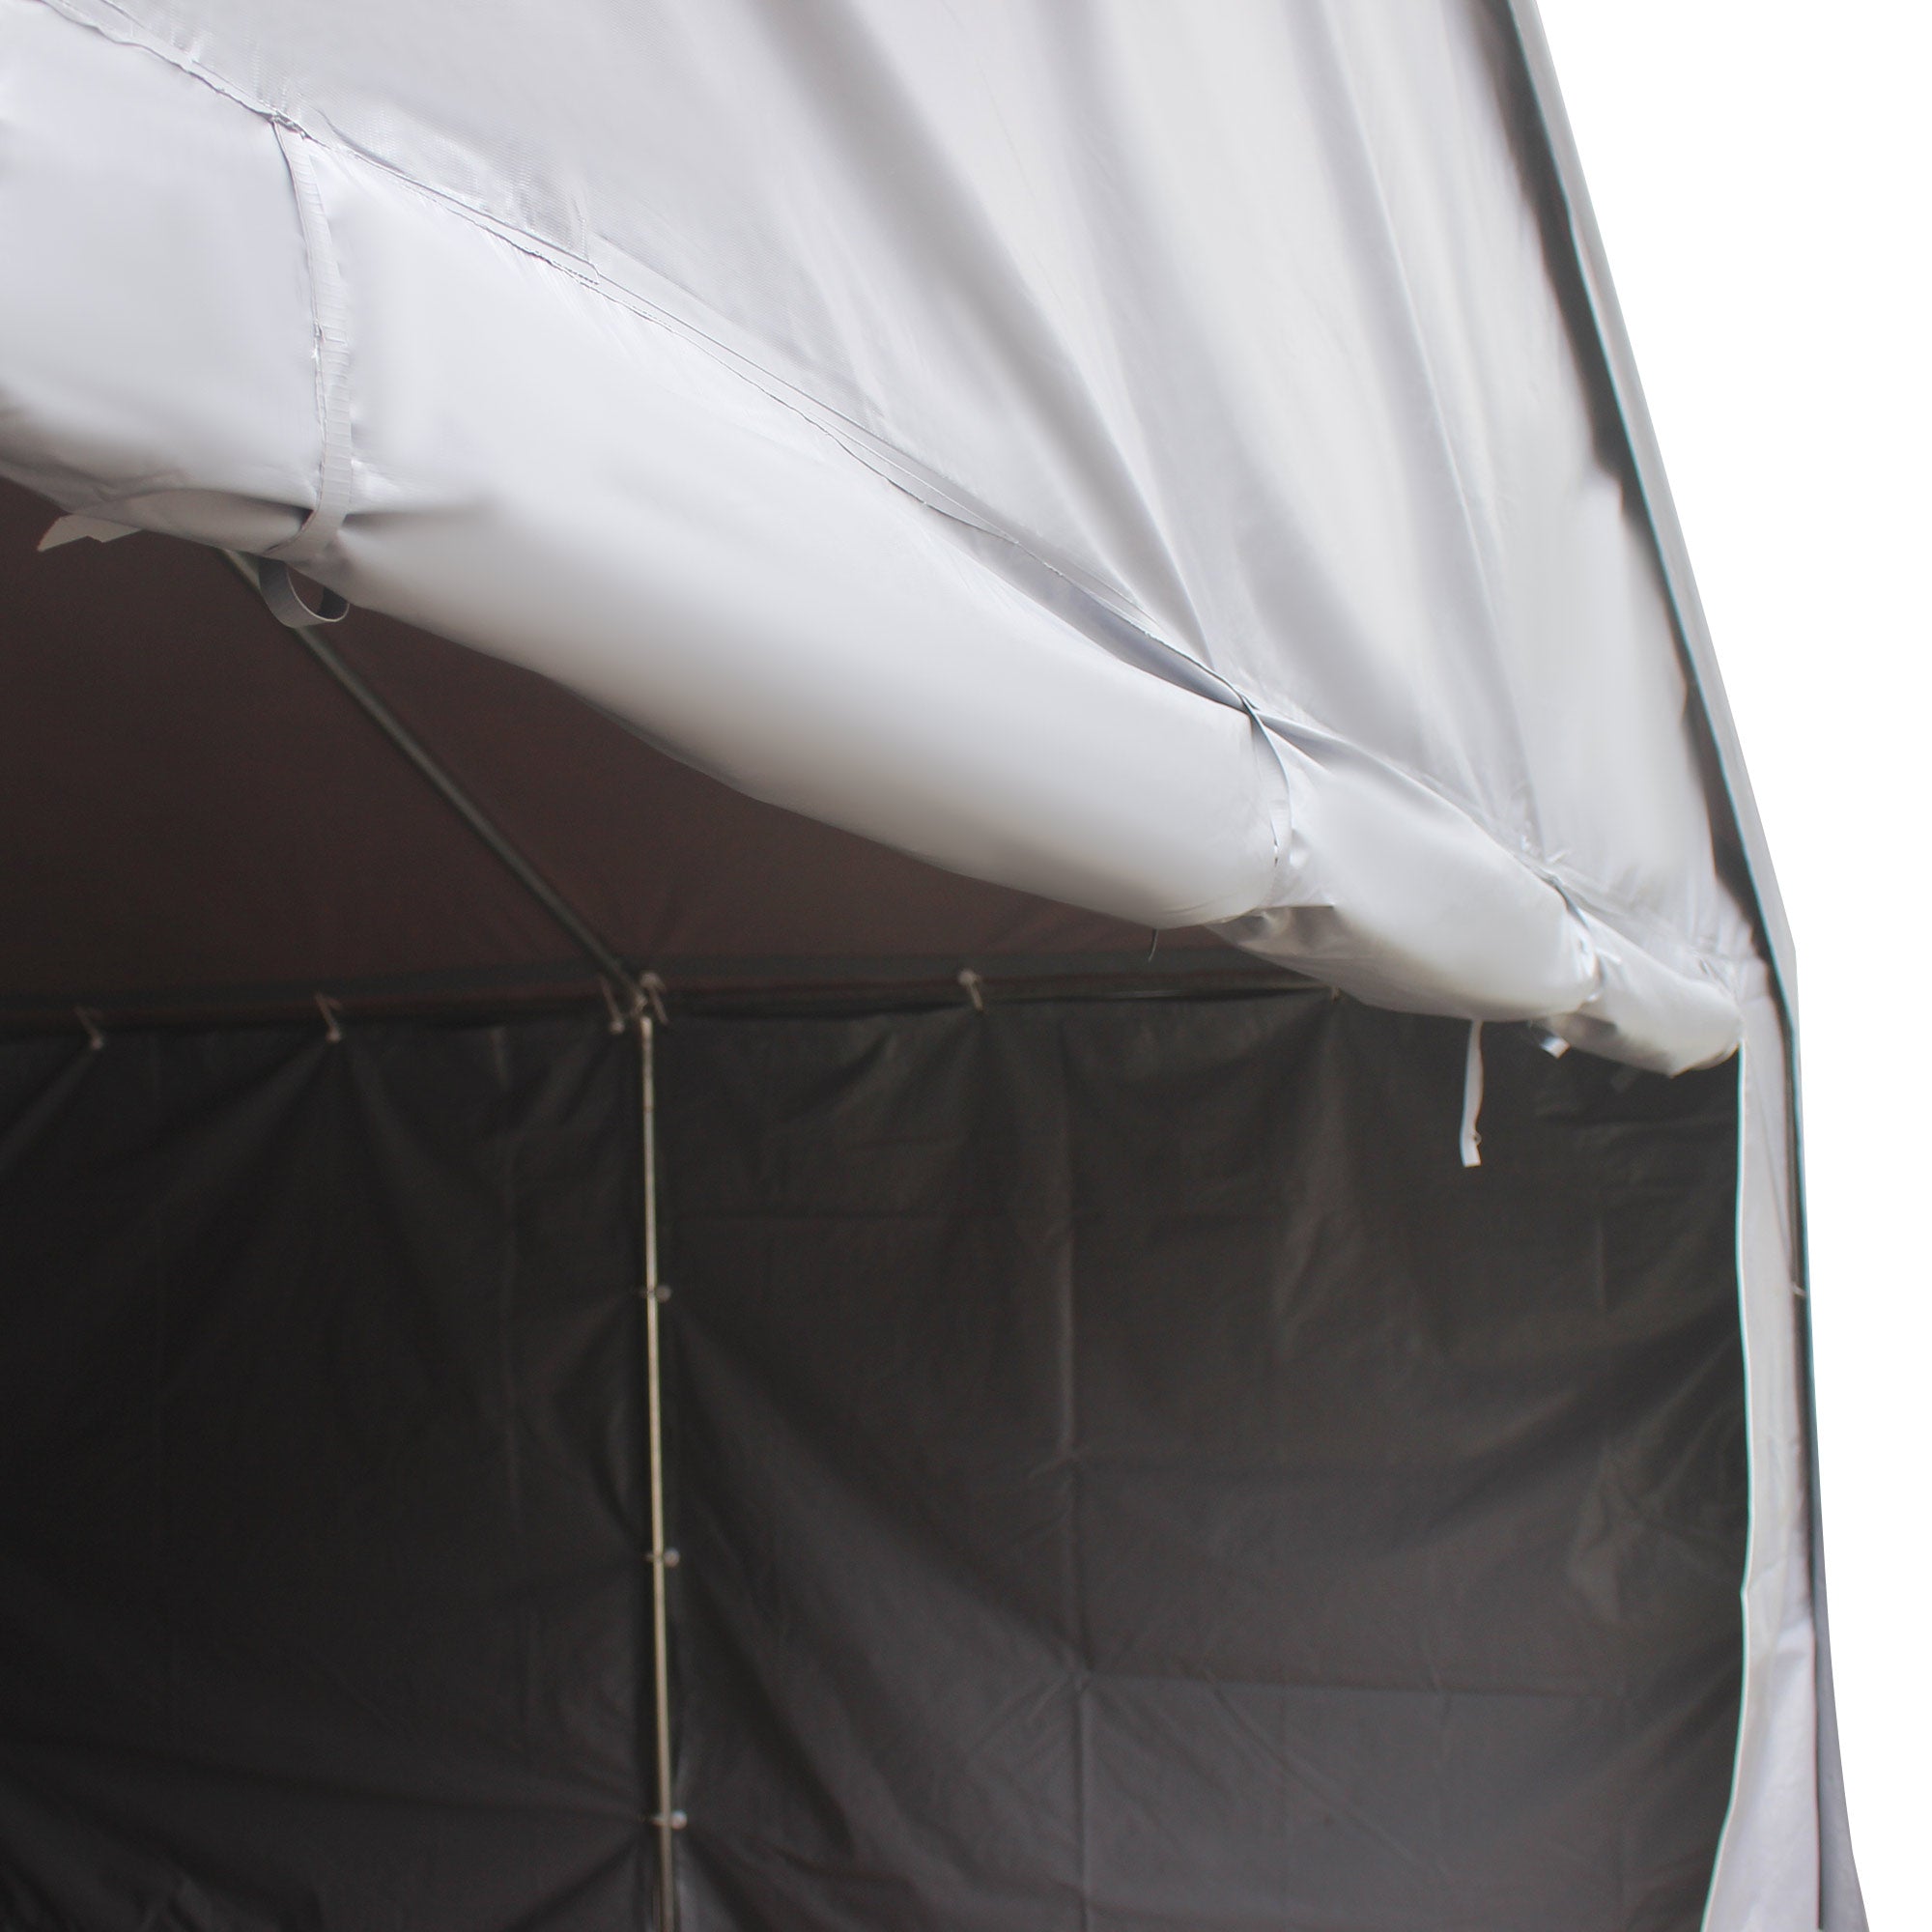 Outsunny 4 x 8 m Patio Garden Party Canopy, Outdoor BBQ, Wedding, Camping Gazebo Tent, Car Canopy Shelter w/ Side Panels & Zipper Door, Dark Grey - Inspirely